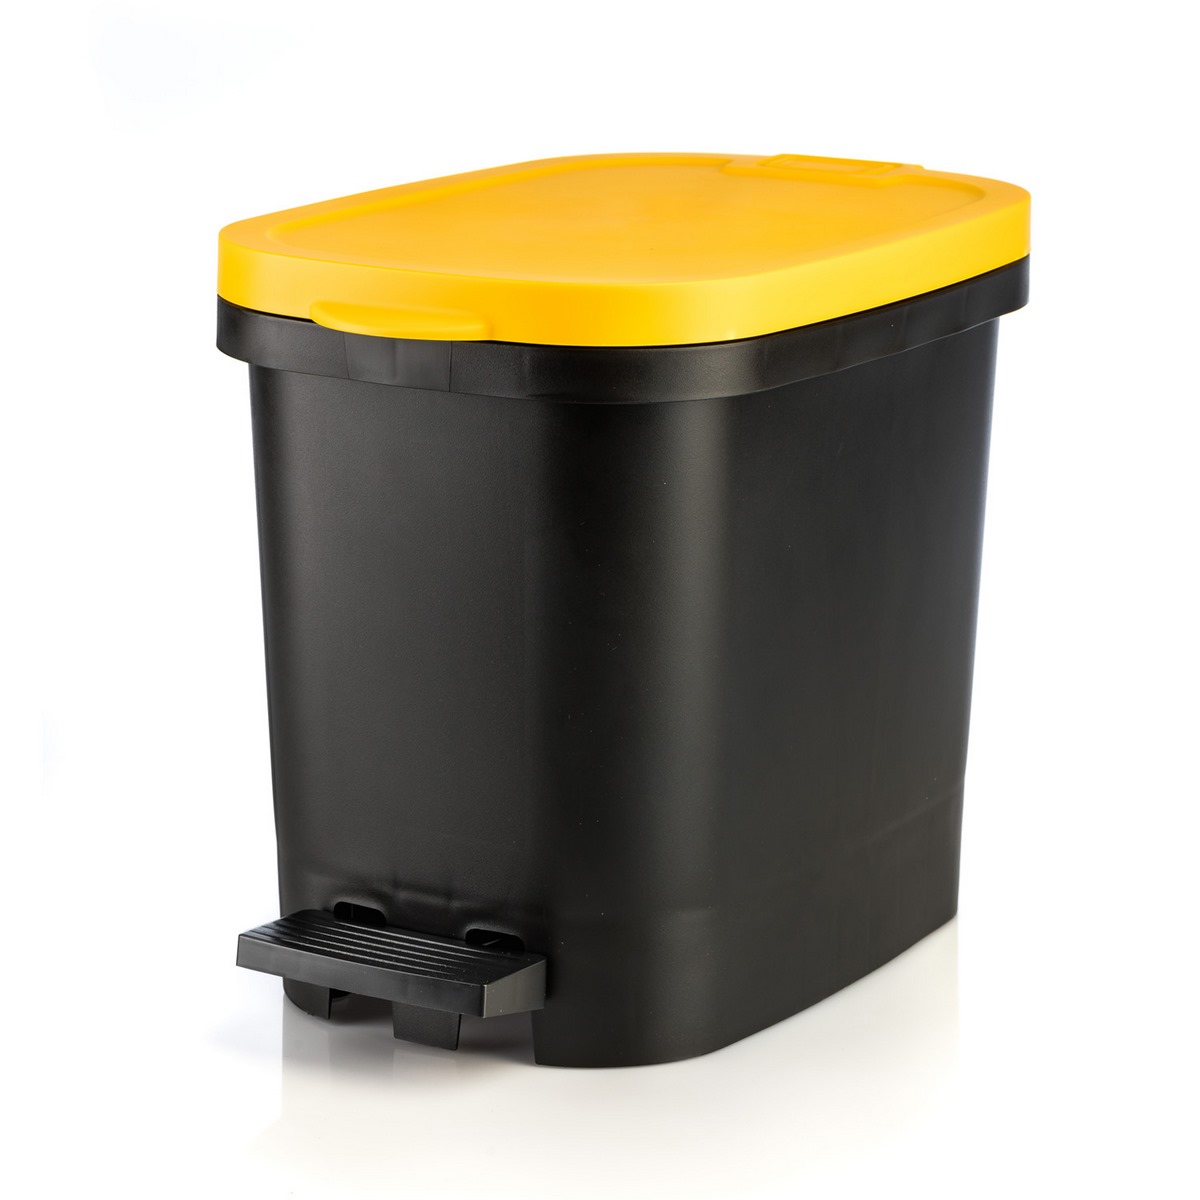 Мусорный бак с педалью BE-UTIL black yellow, 23х30 см, 35 см, 10 л, Пластик, Faplana, Португалия